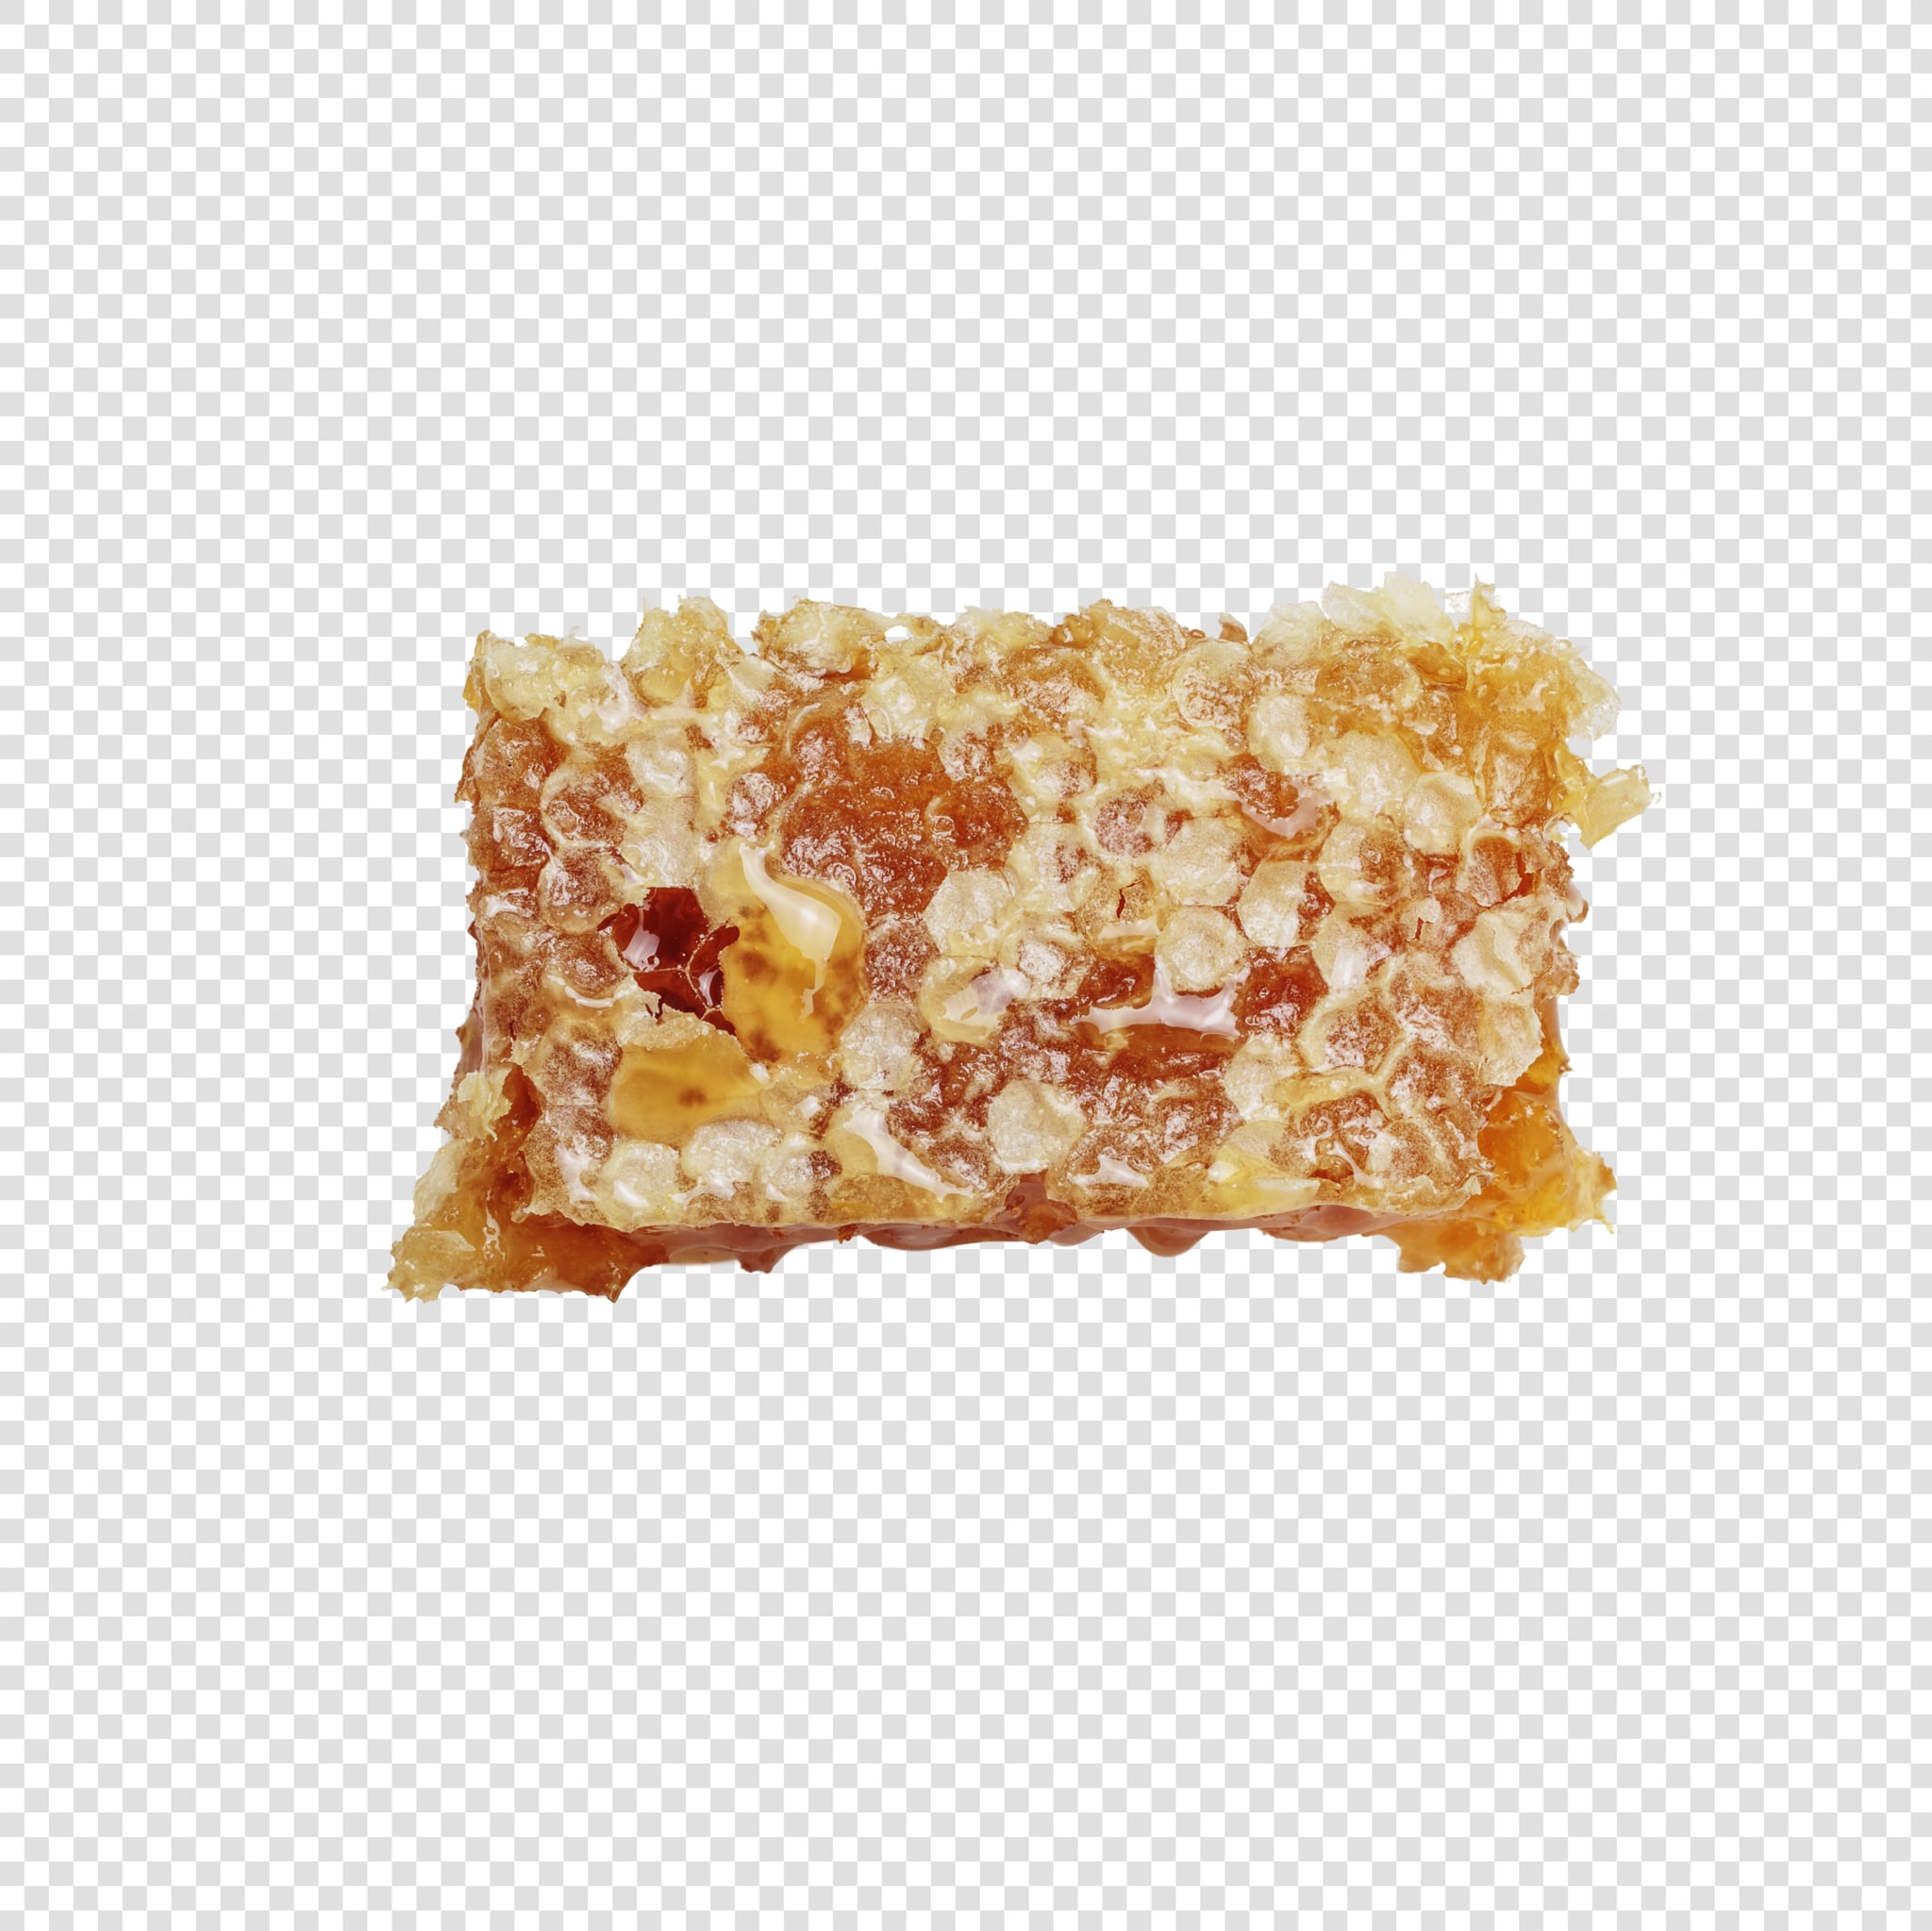 Honey image asset with transparent background